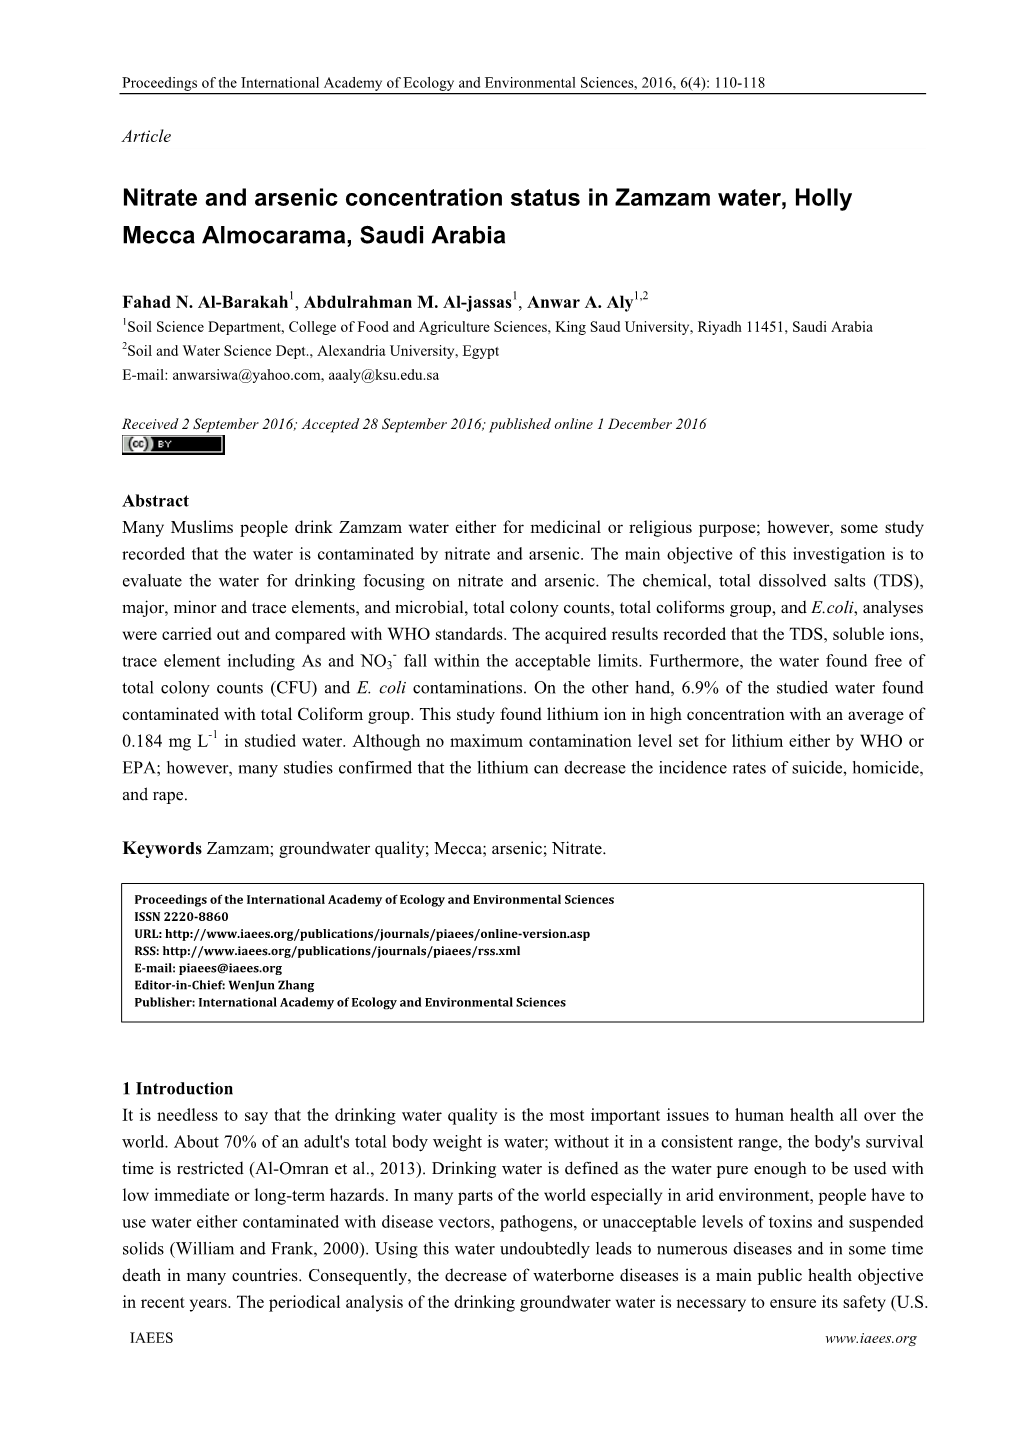 Nitrate and Arsenic Concentration Status in Zamzam Water, Holly Mecca Almocarama, Saudi Arabia